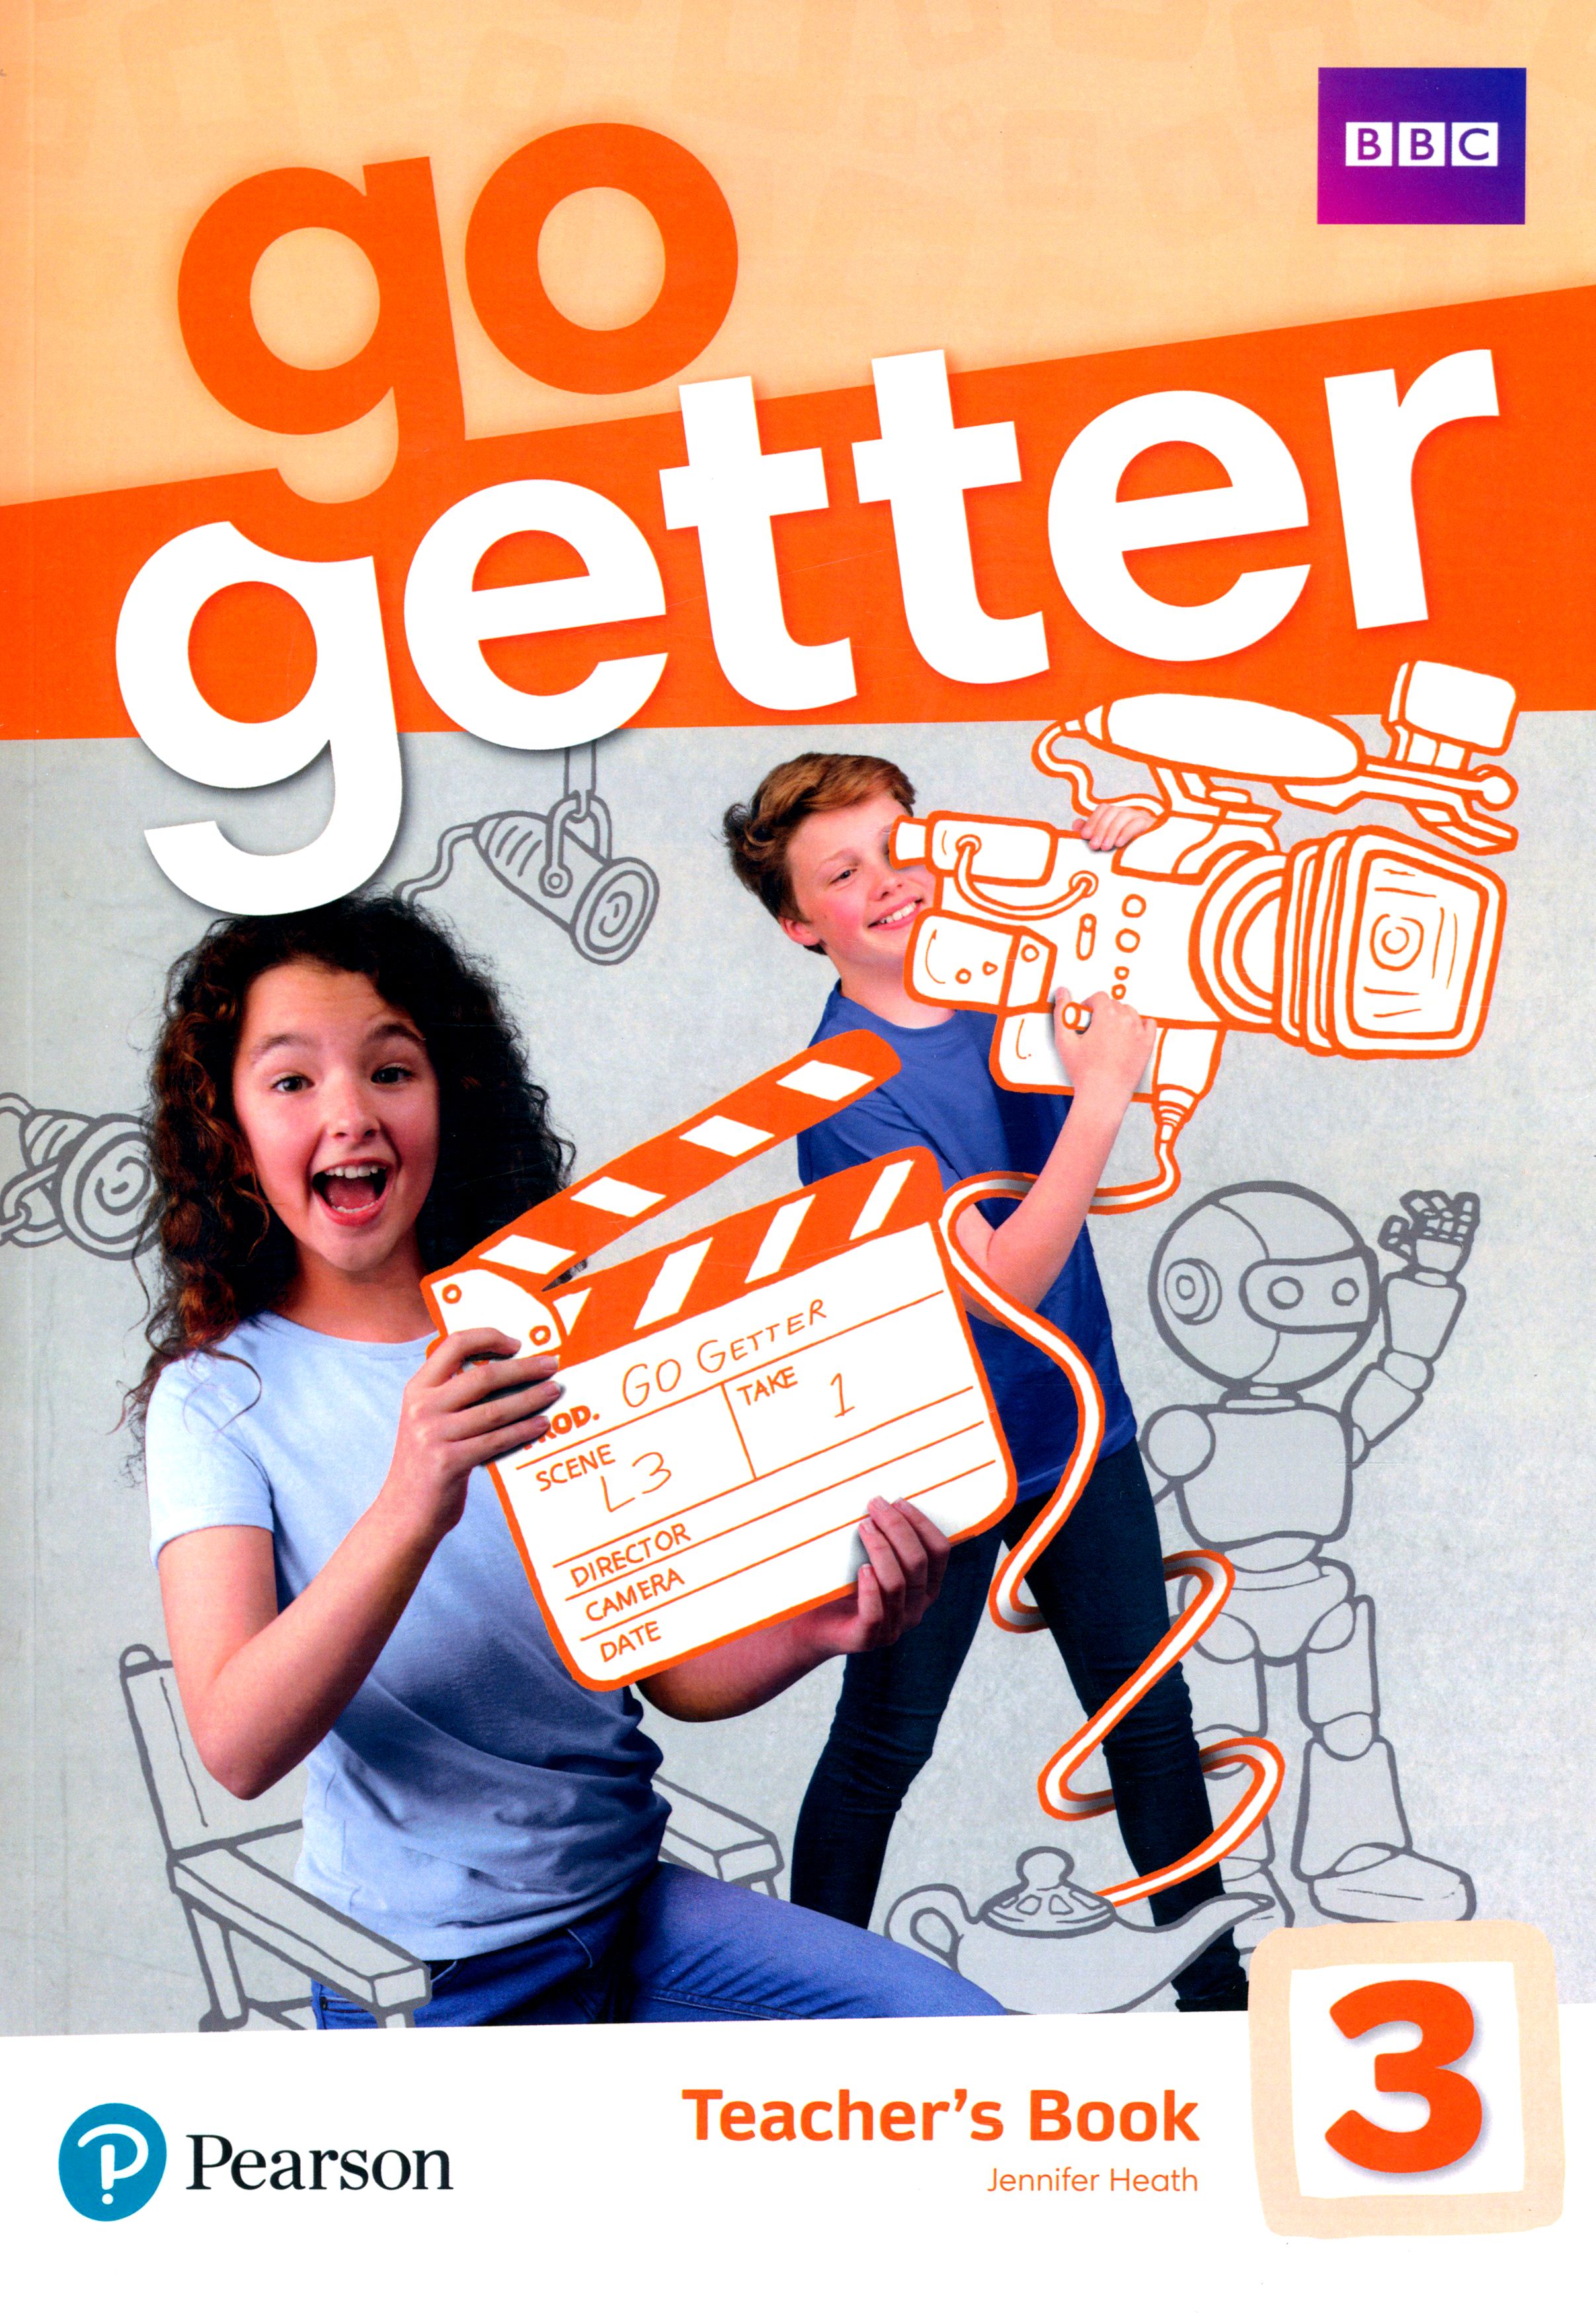 Go getter 3 страница 3. Go Getter 3 teacher's book обложка. Teacher книги. Go Getter 3 книга для учителя. Книга для учителя (teacher’s book.